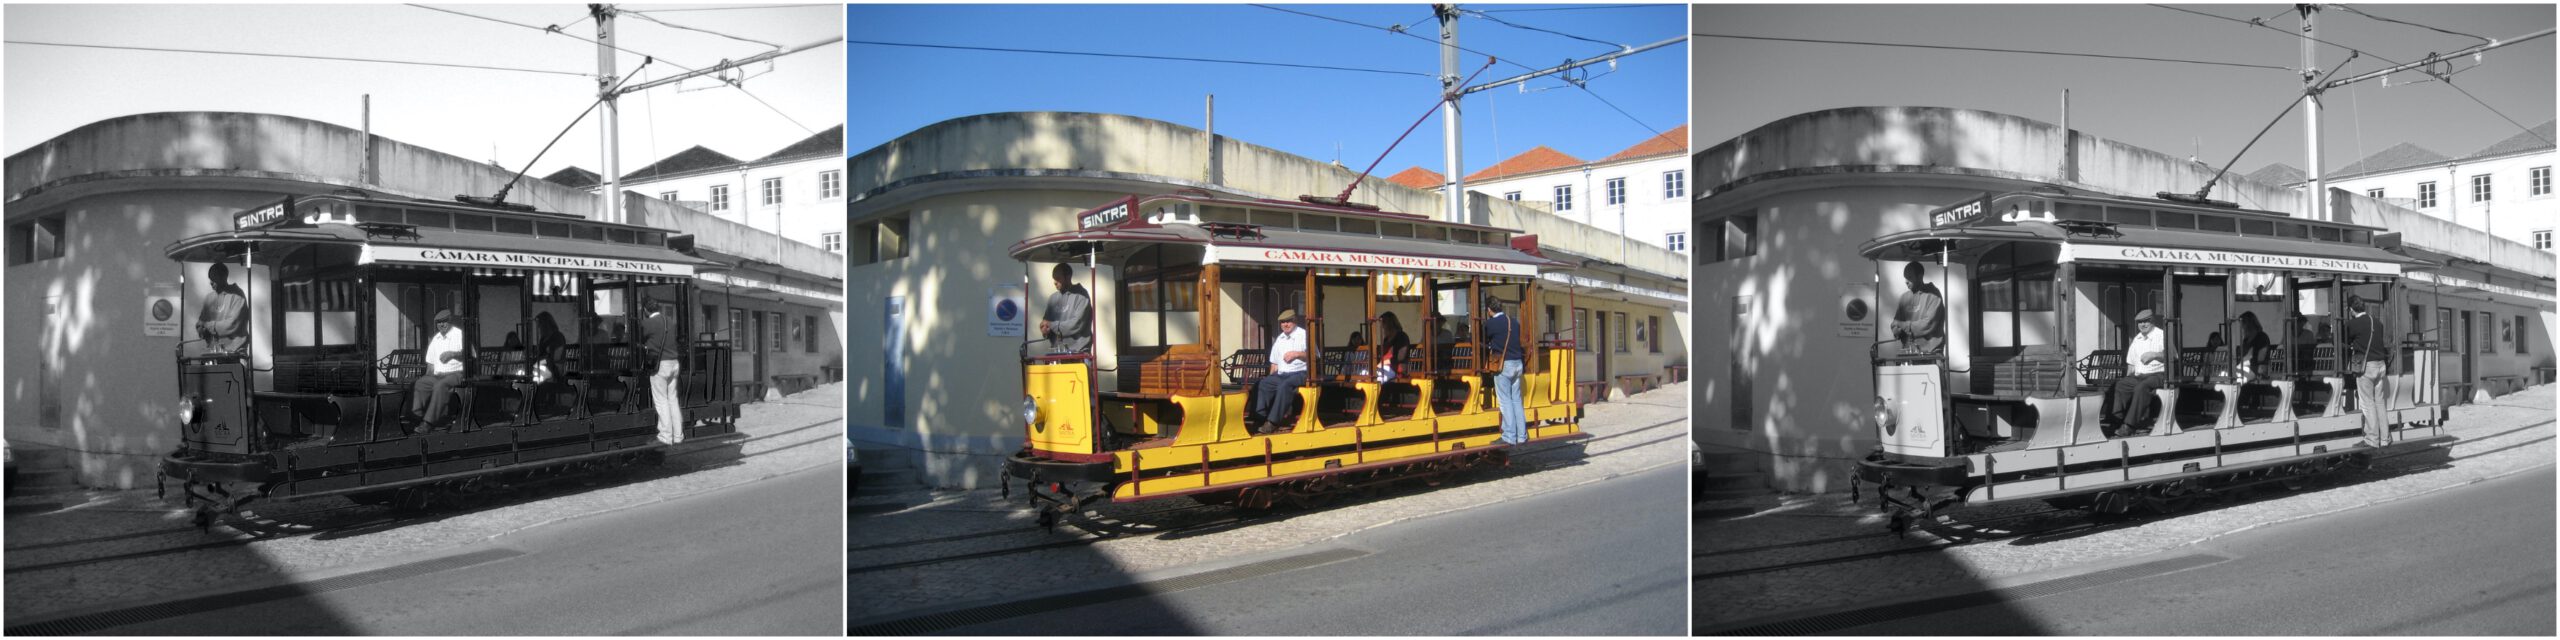 Sintra yellow tram